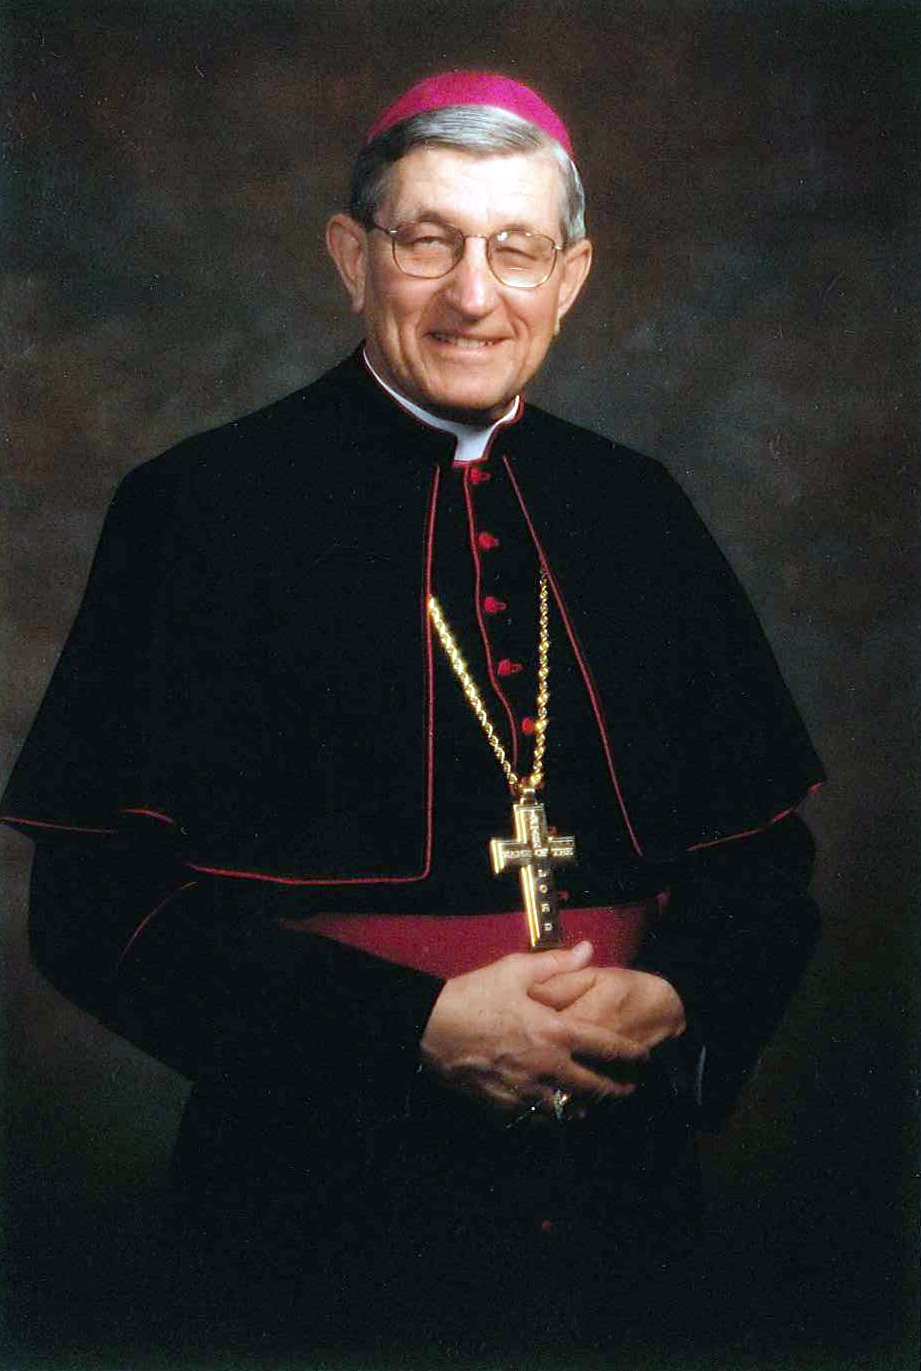 Bishop Robert Rose